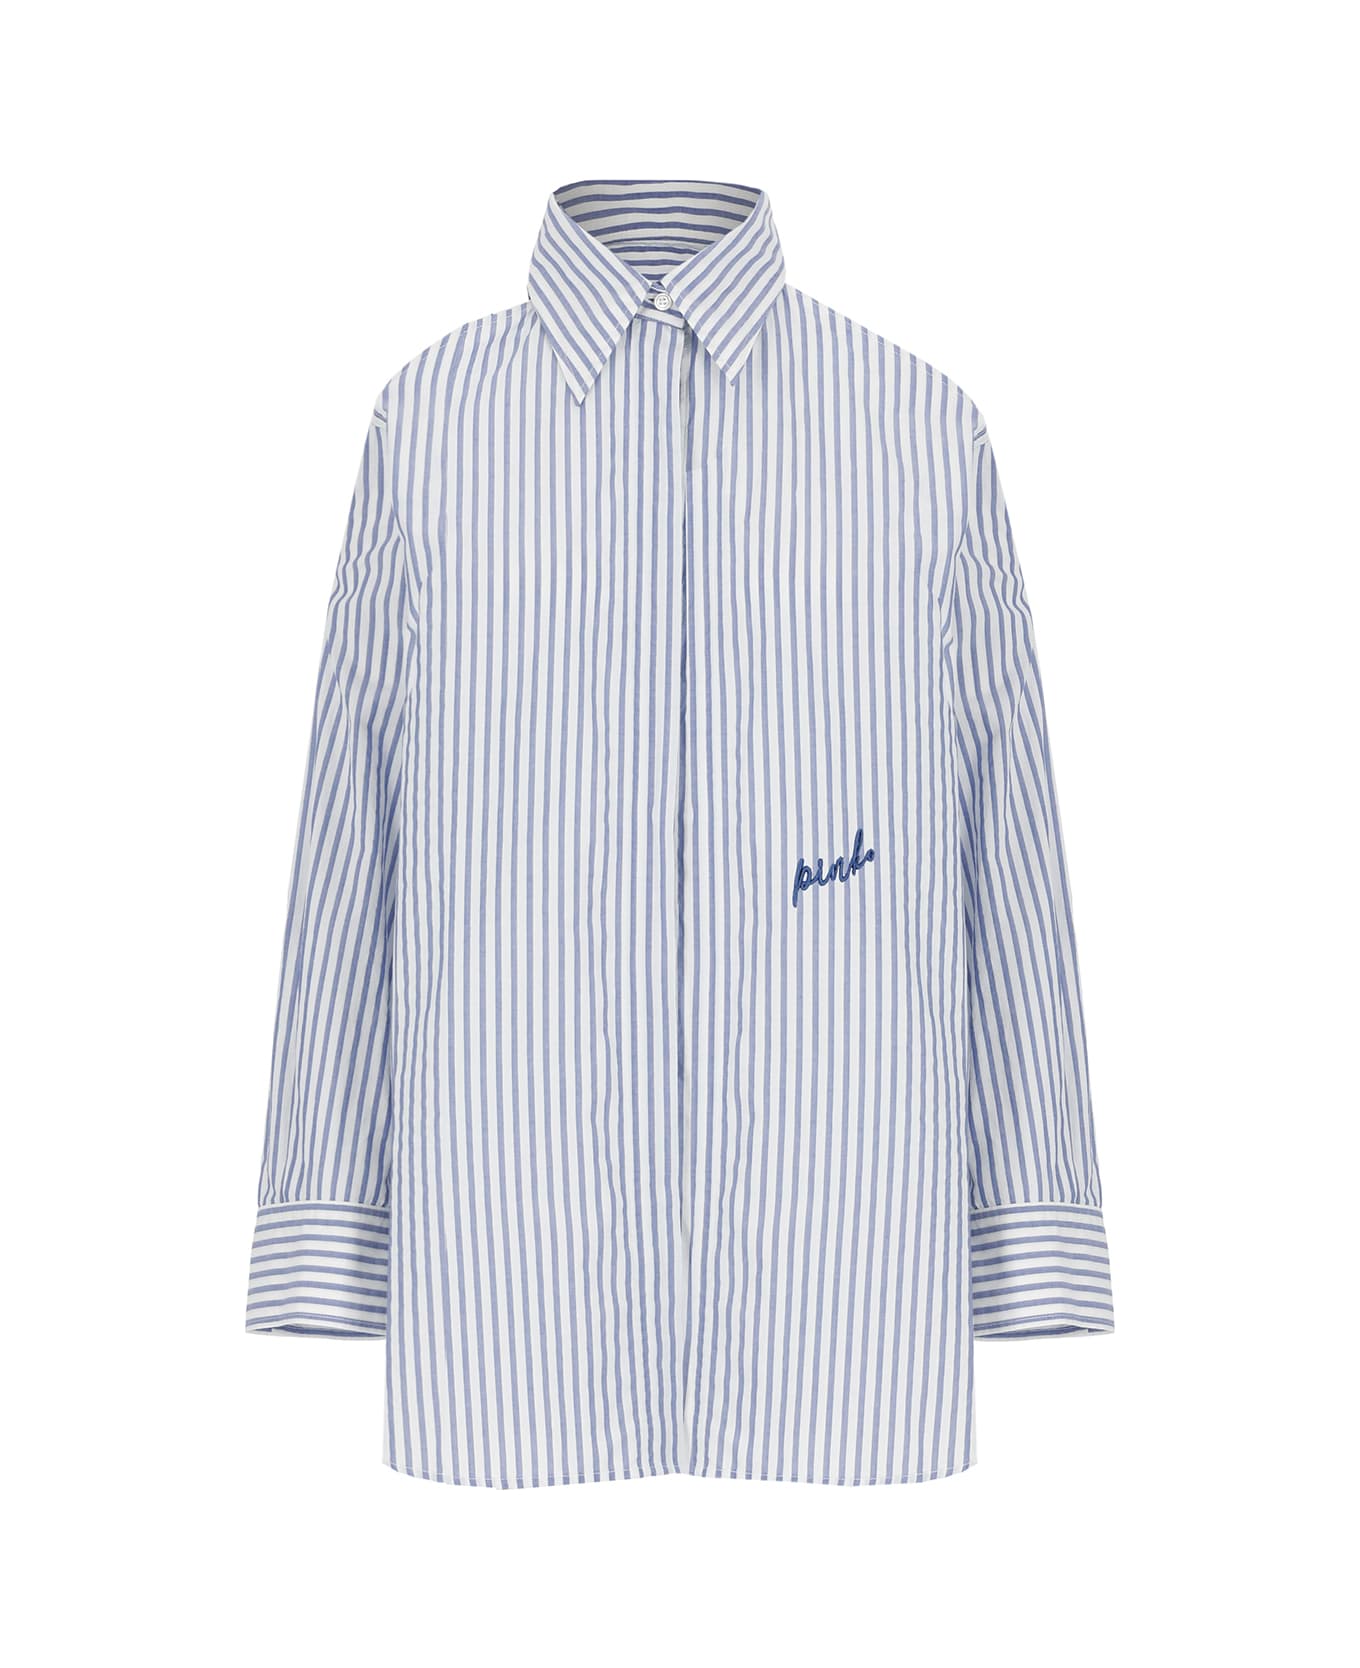 Pinko Canterno Striped Shirt - Light Blue